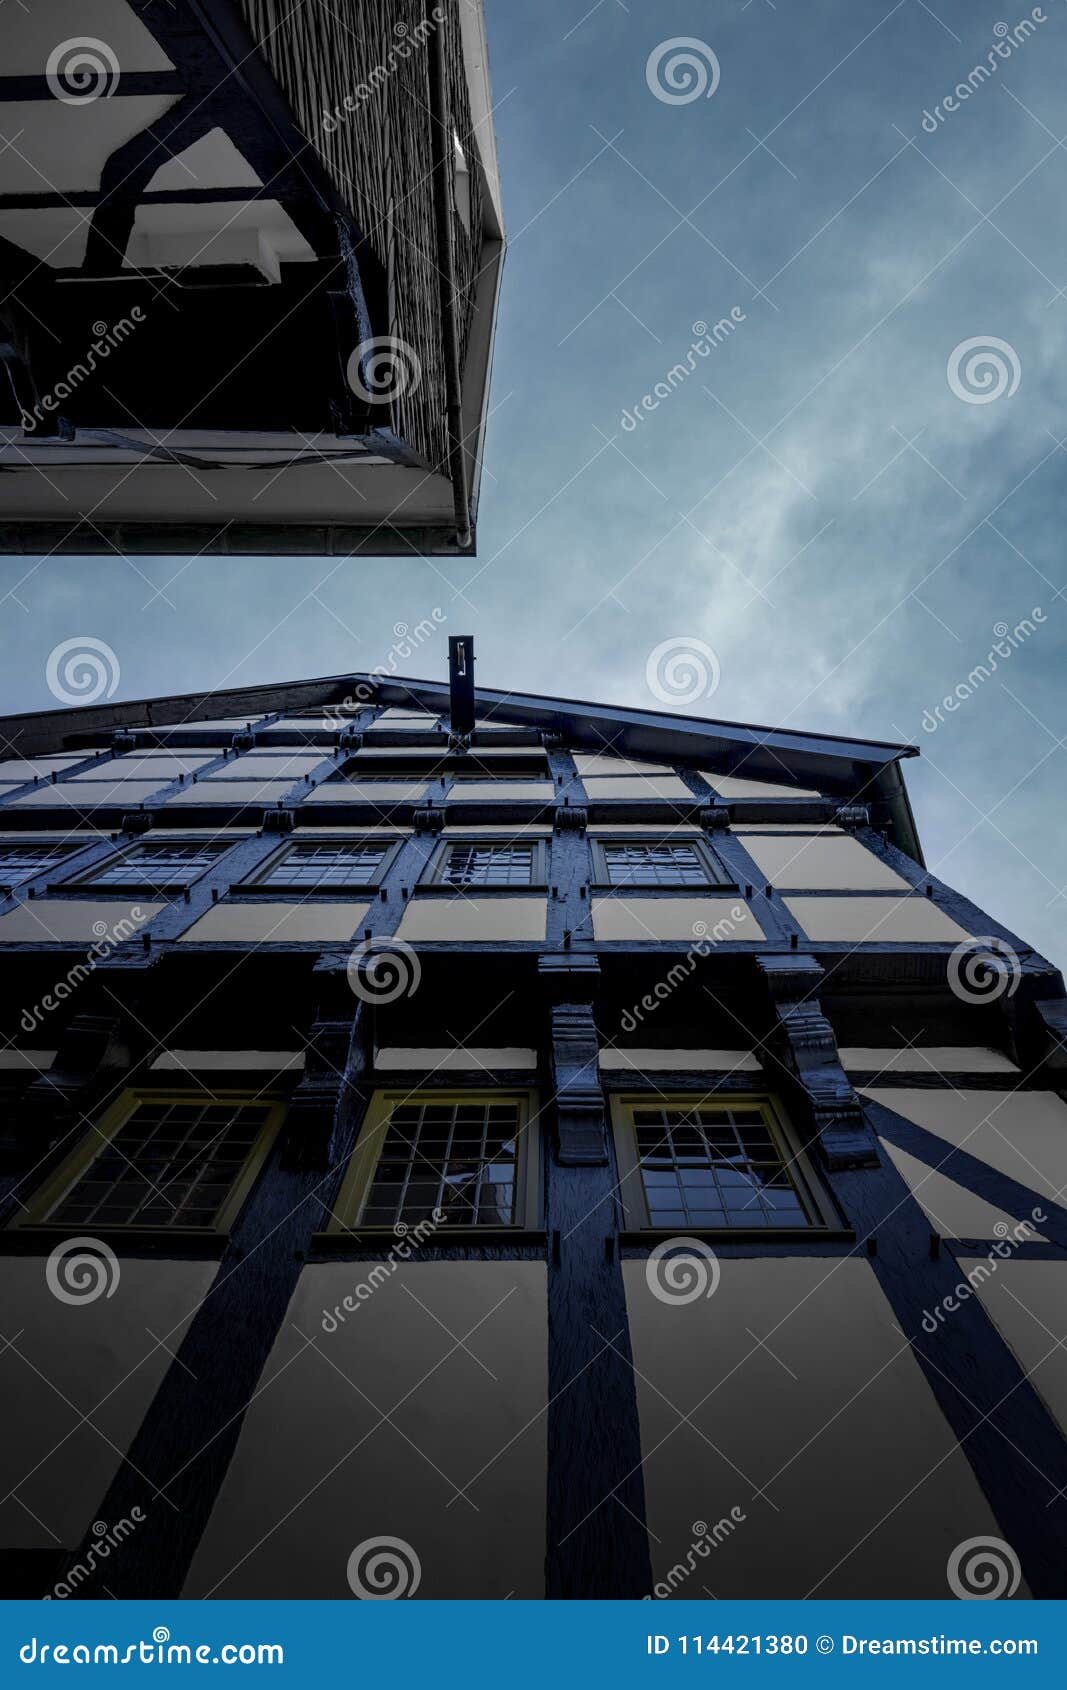 framehouse in germany / hattingen